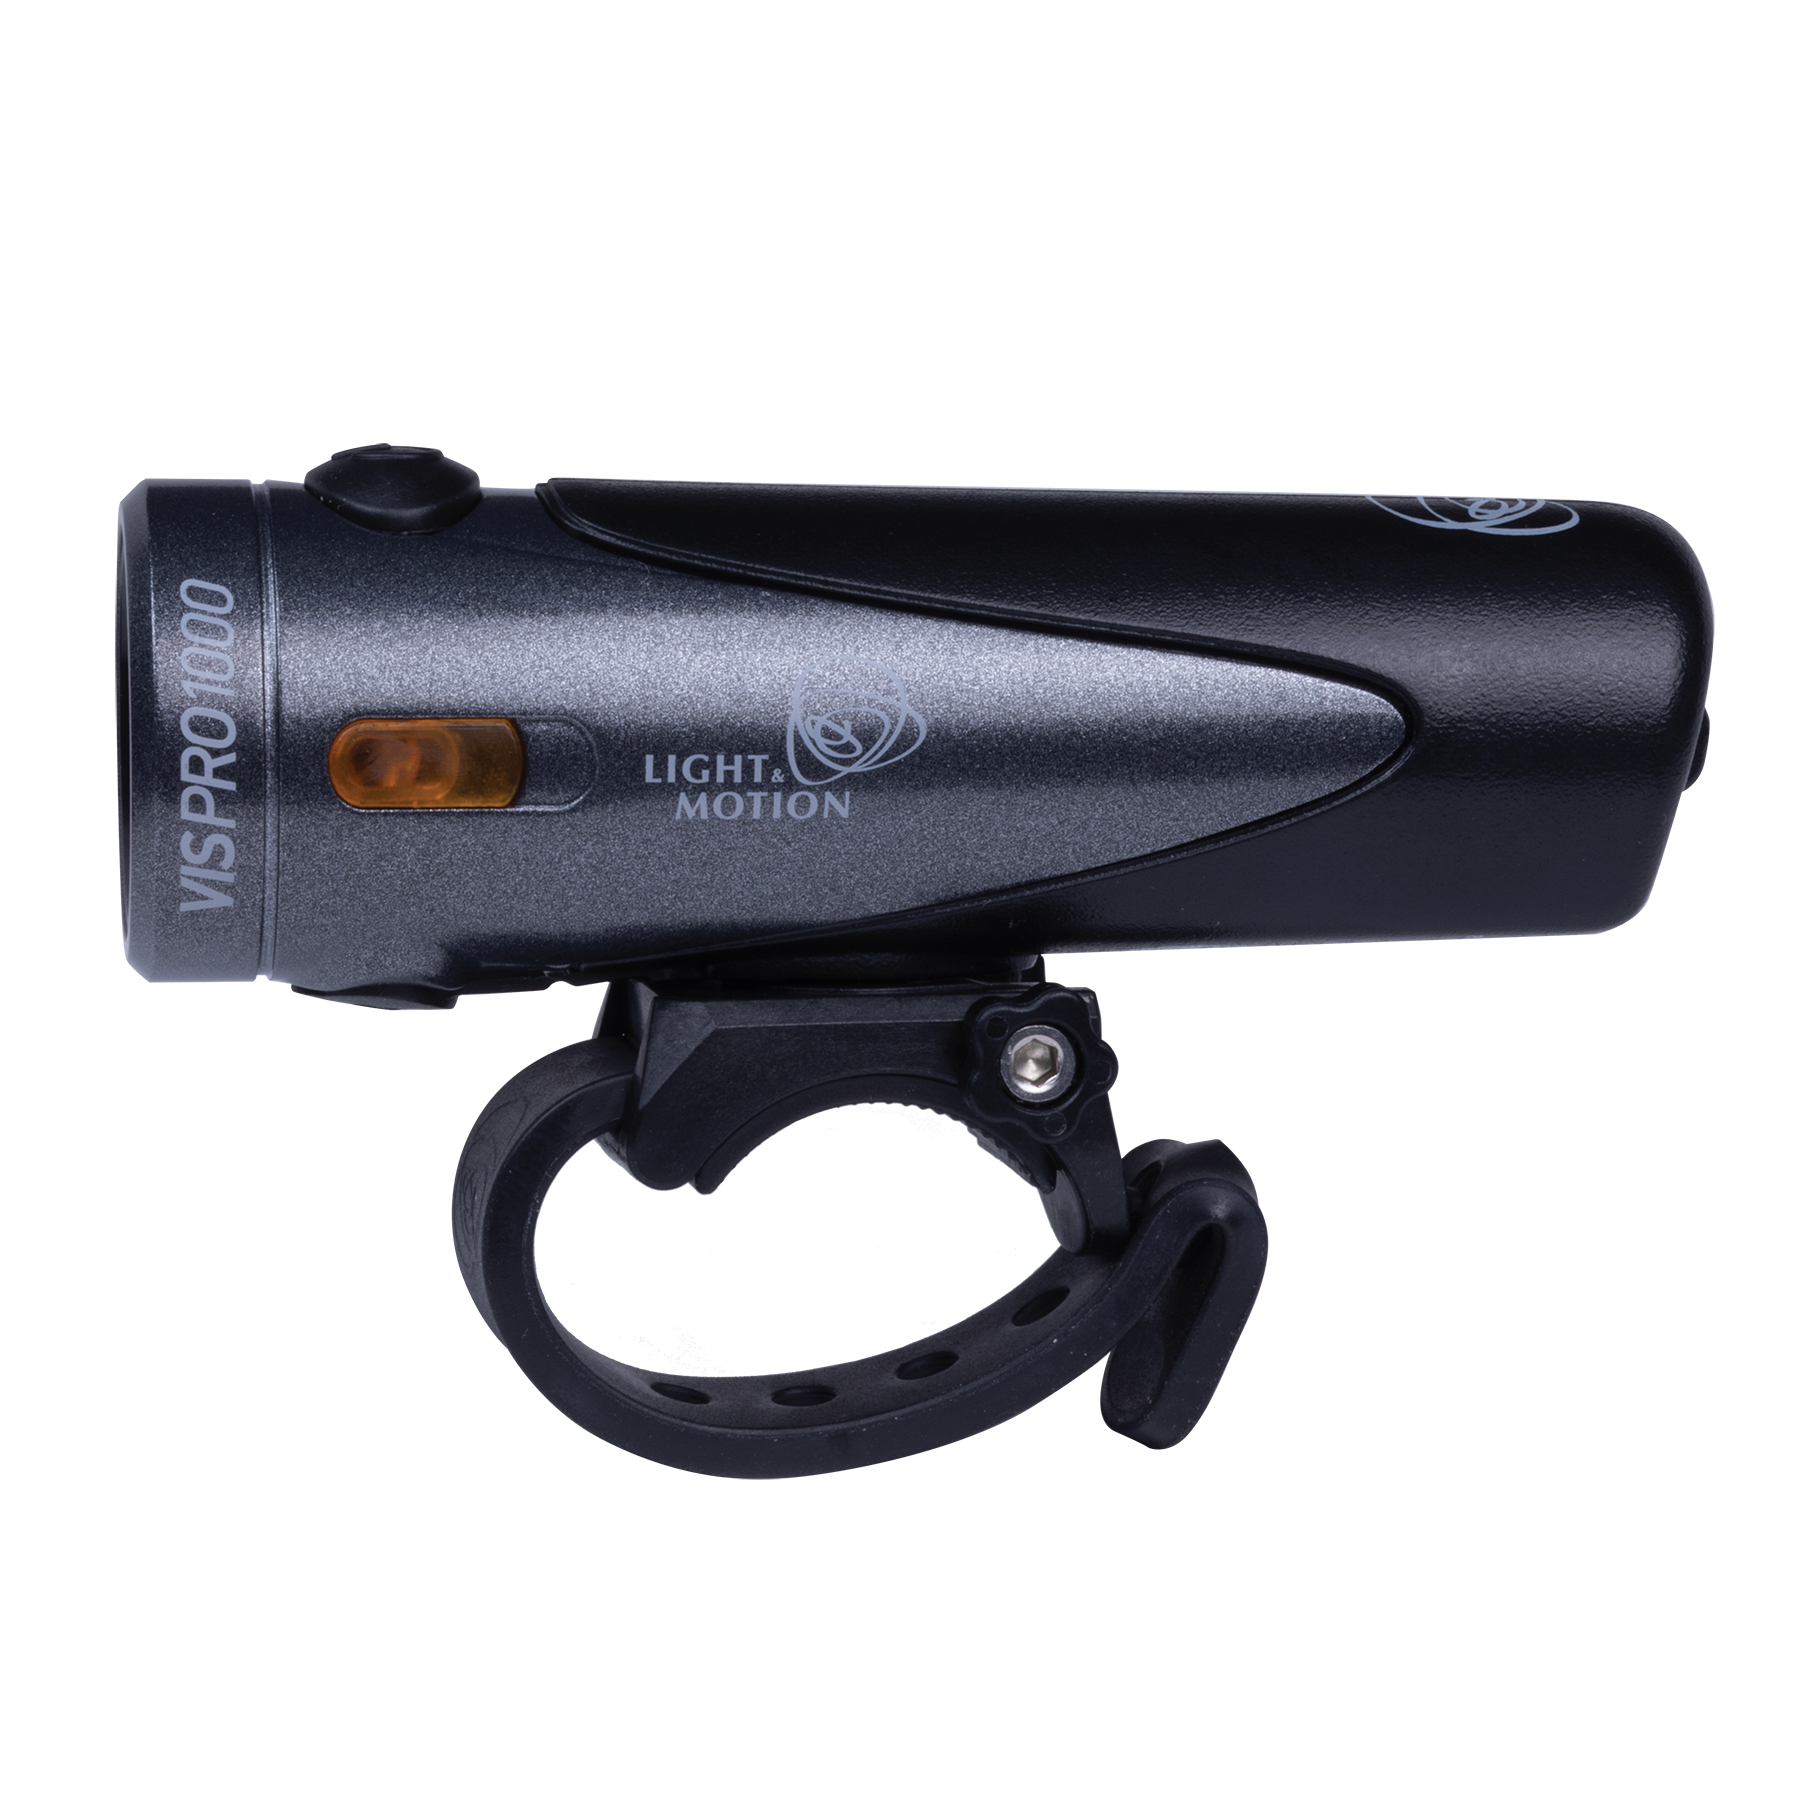 VIS Pro 1000 Blacktop Headlight